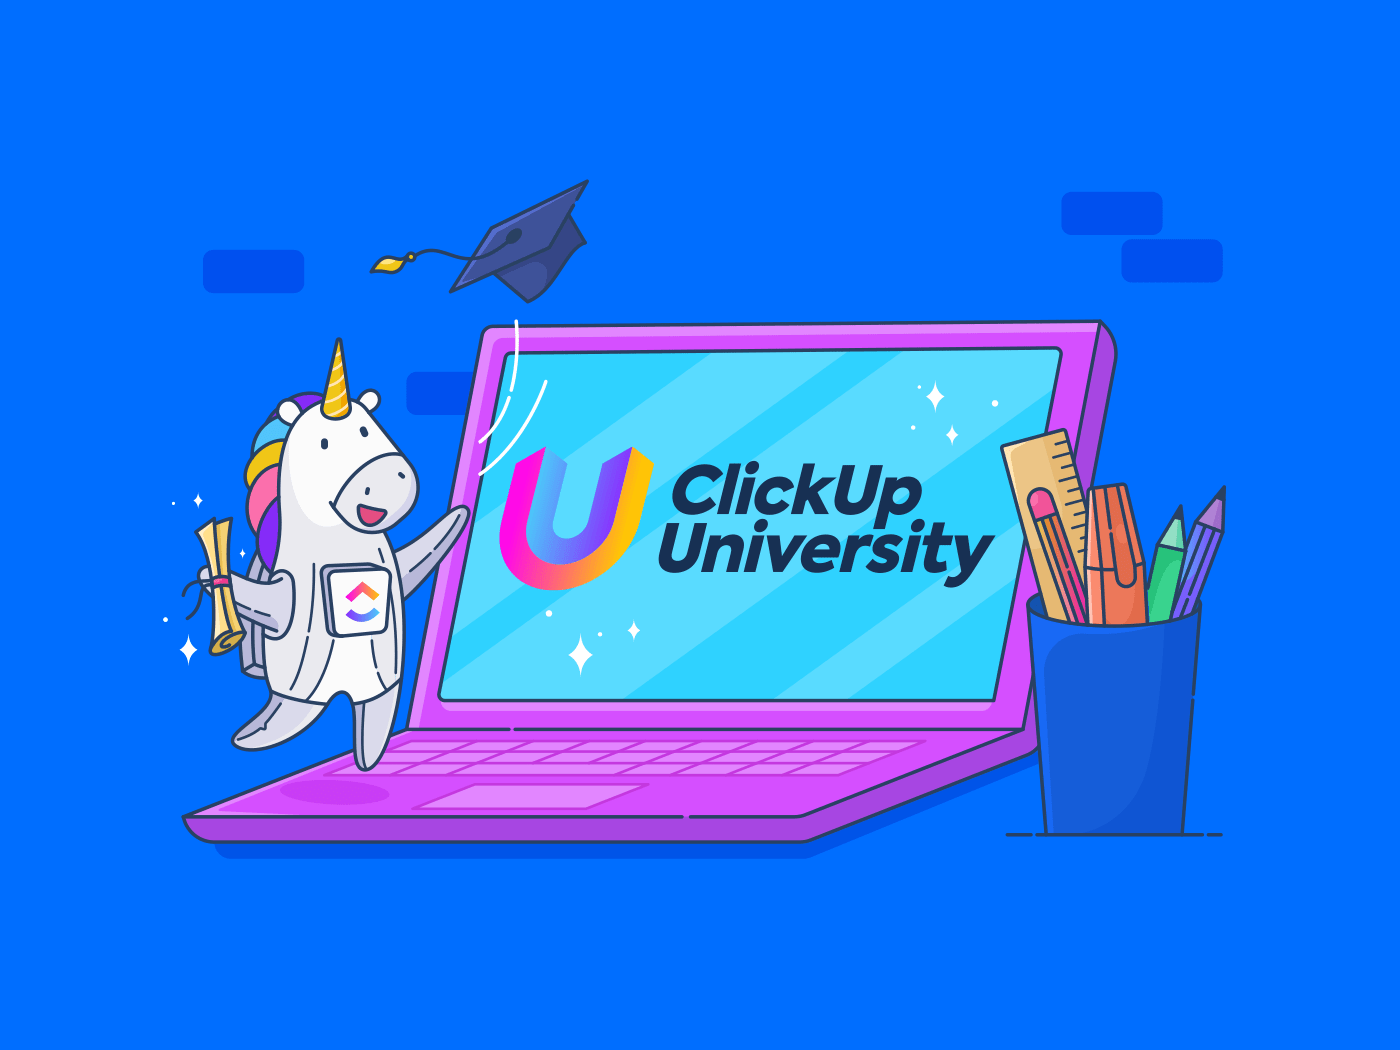 ClickUp University